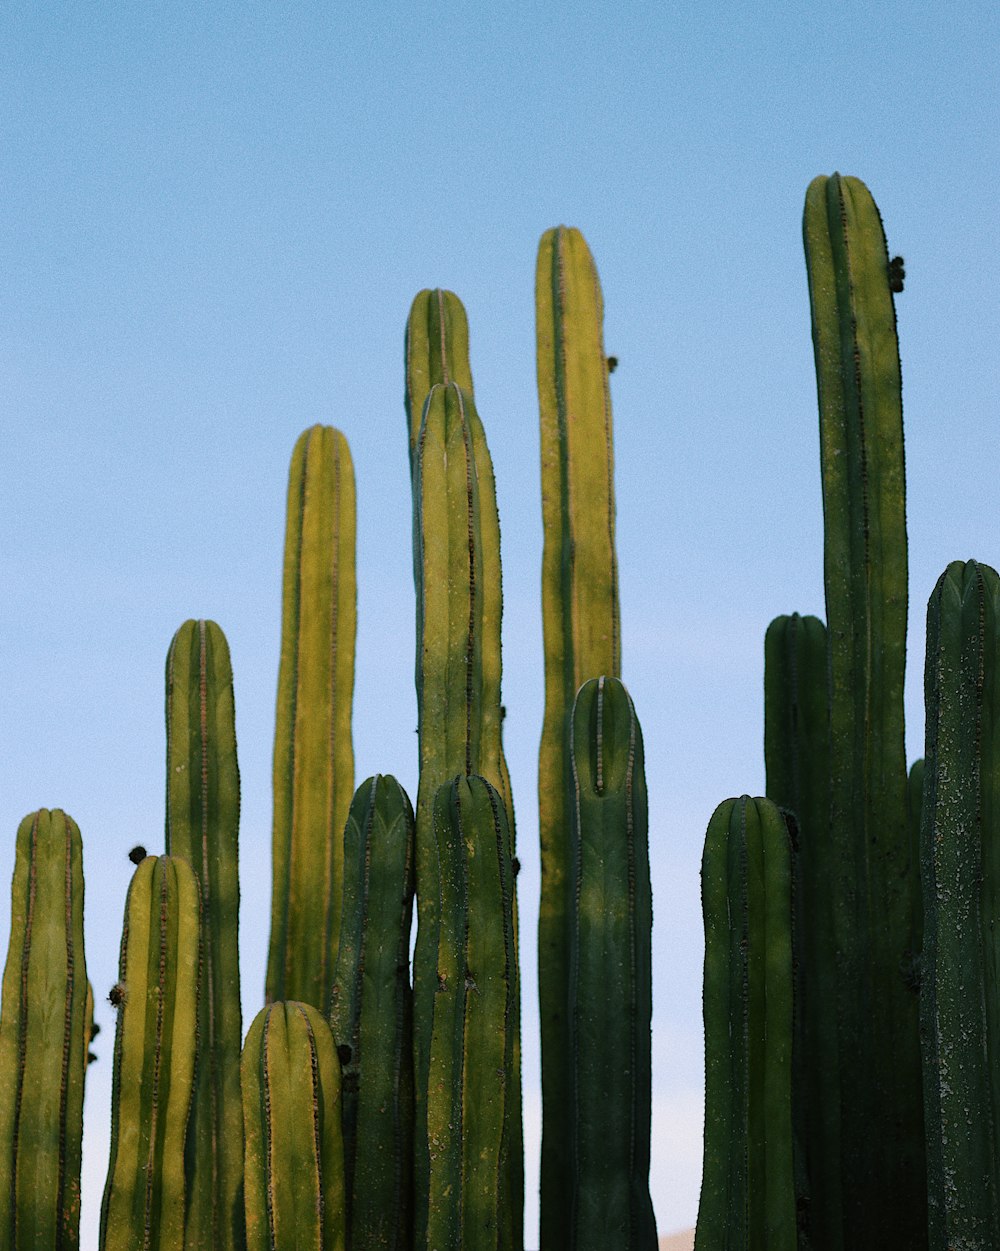 Grüner Kaktus unter blauem Himmel am Tag